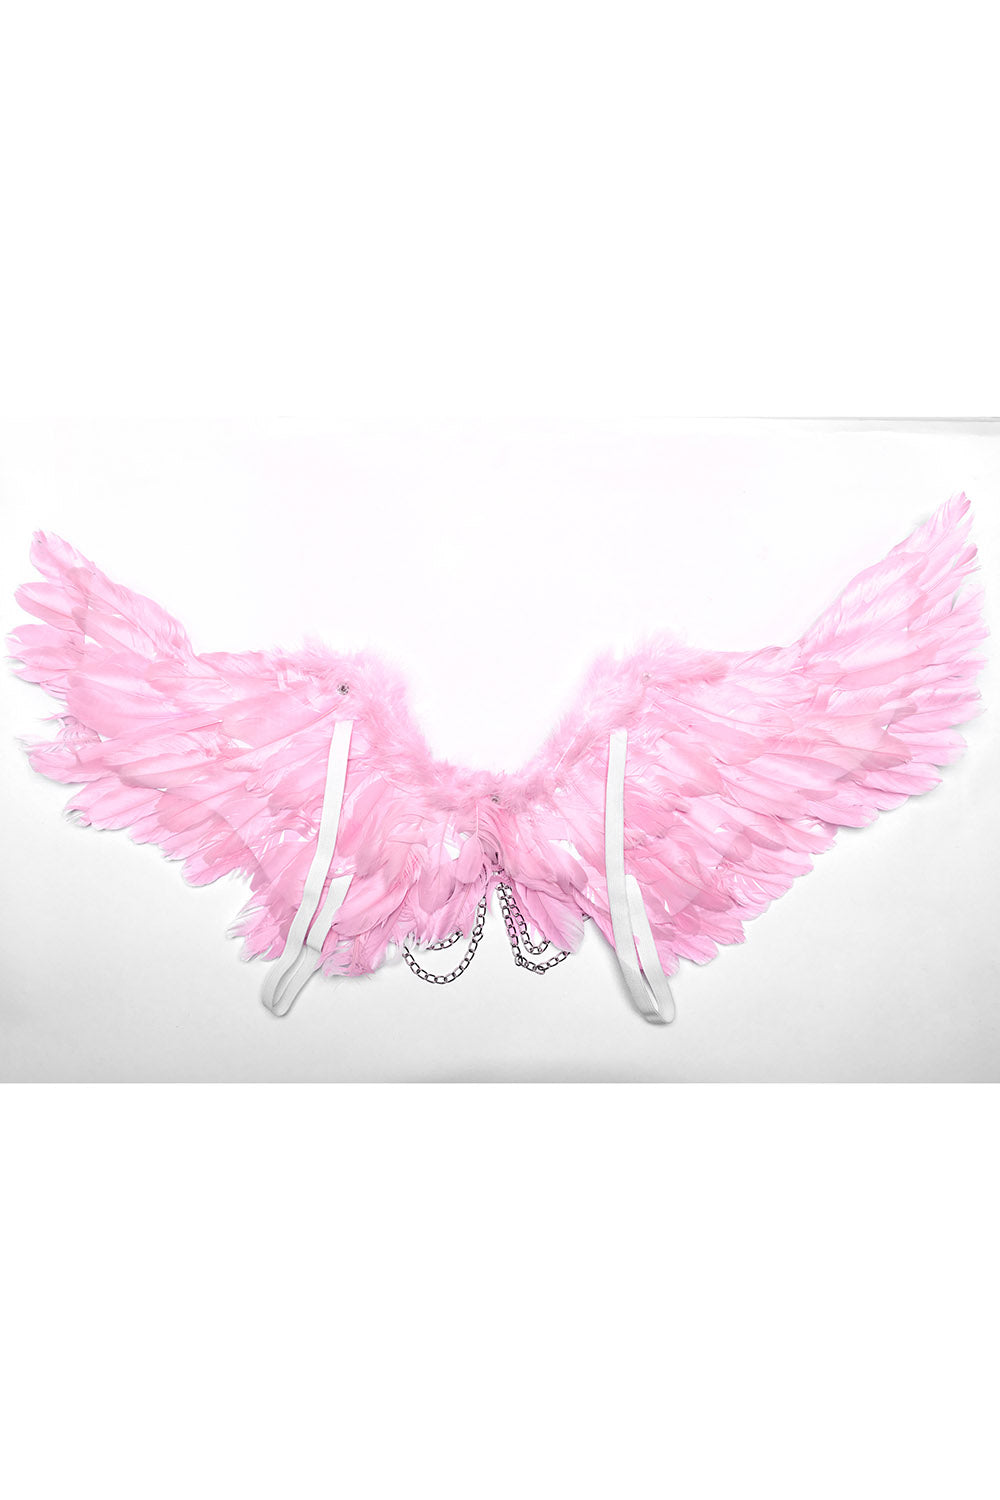 kawaii harajuku wings